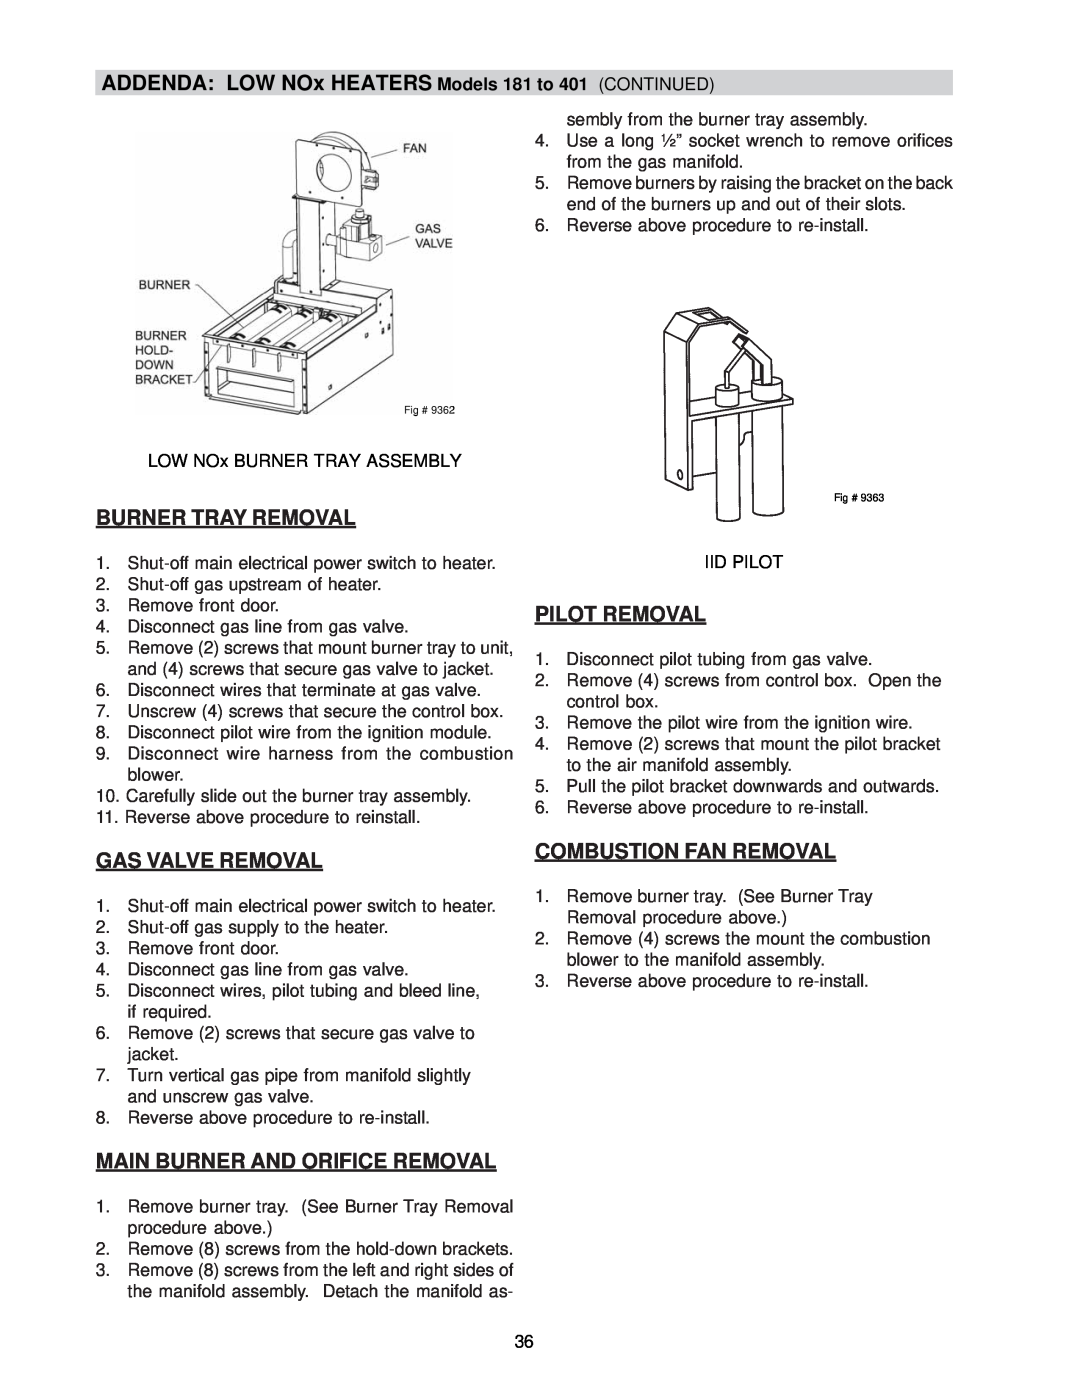 Raypak 0133-4001 manual Burner Tray Removal, Pilot Removal, Gas Valve Removal, Main Burner And Orifice Removal 